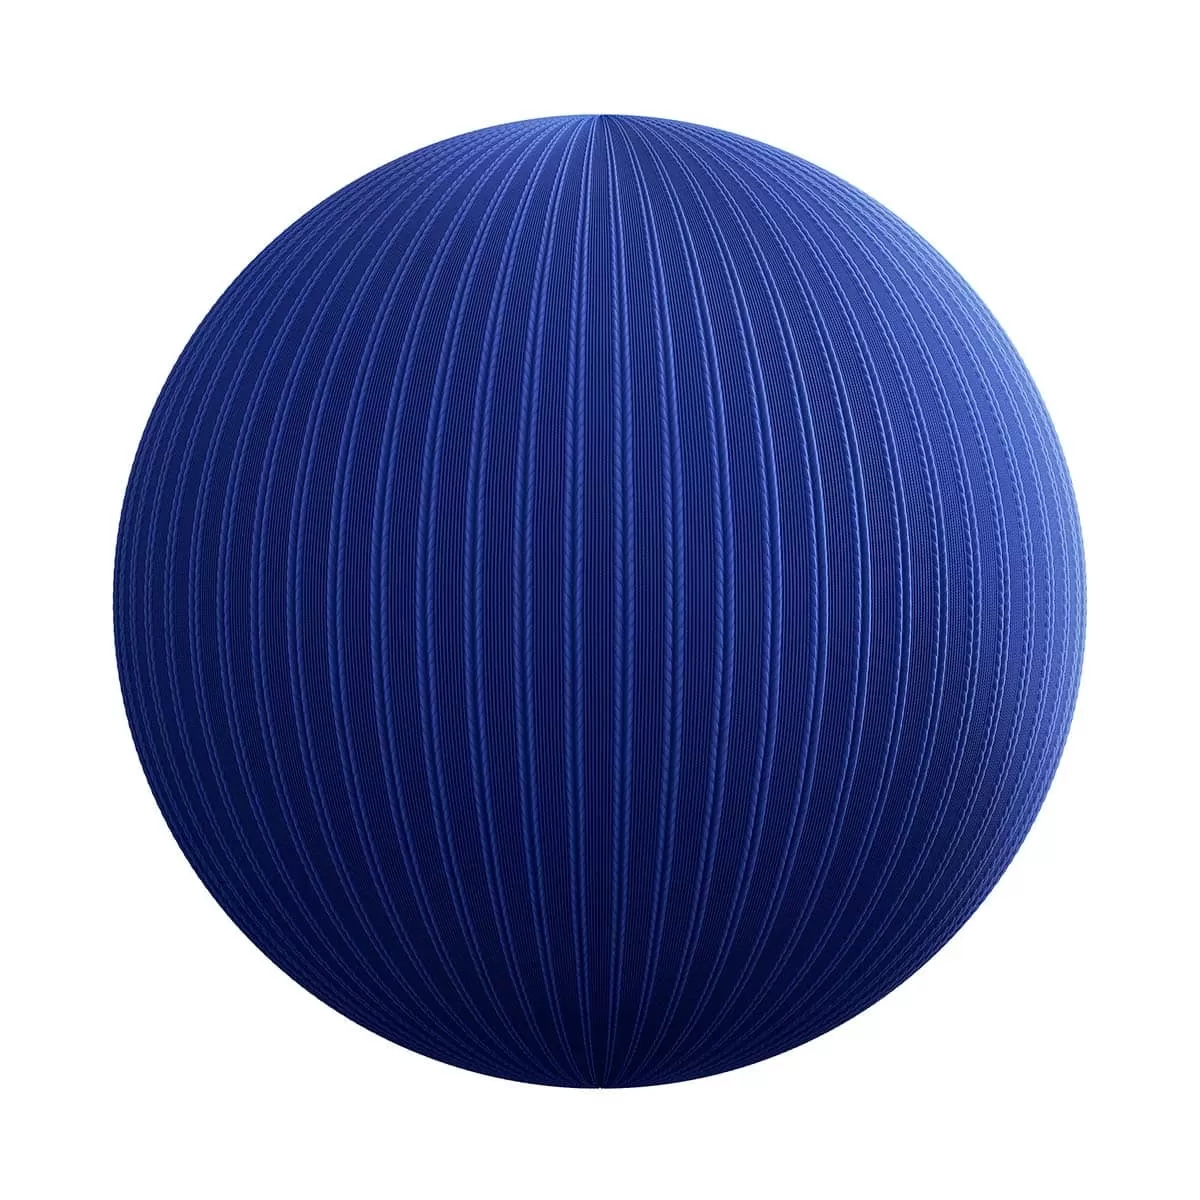 PBR Textures Volume 27 – Fabrics – 4K – 8K – striped_blue_fabric_26_17